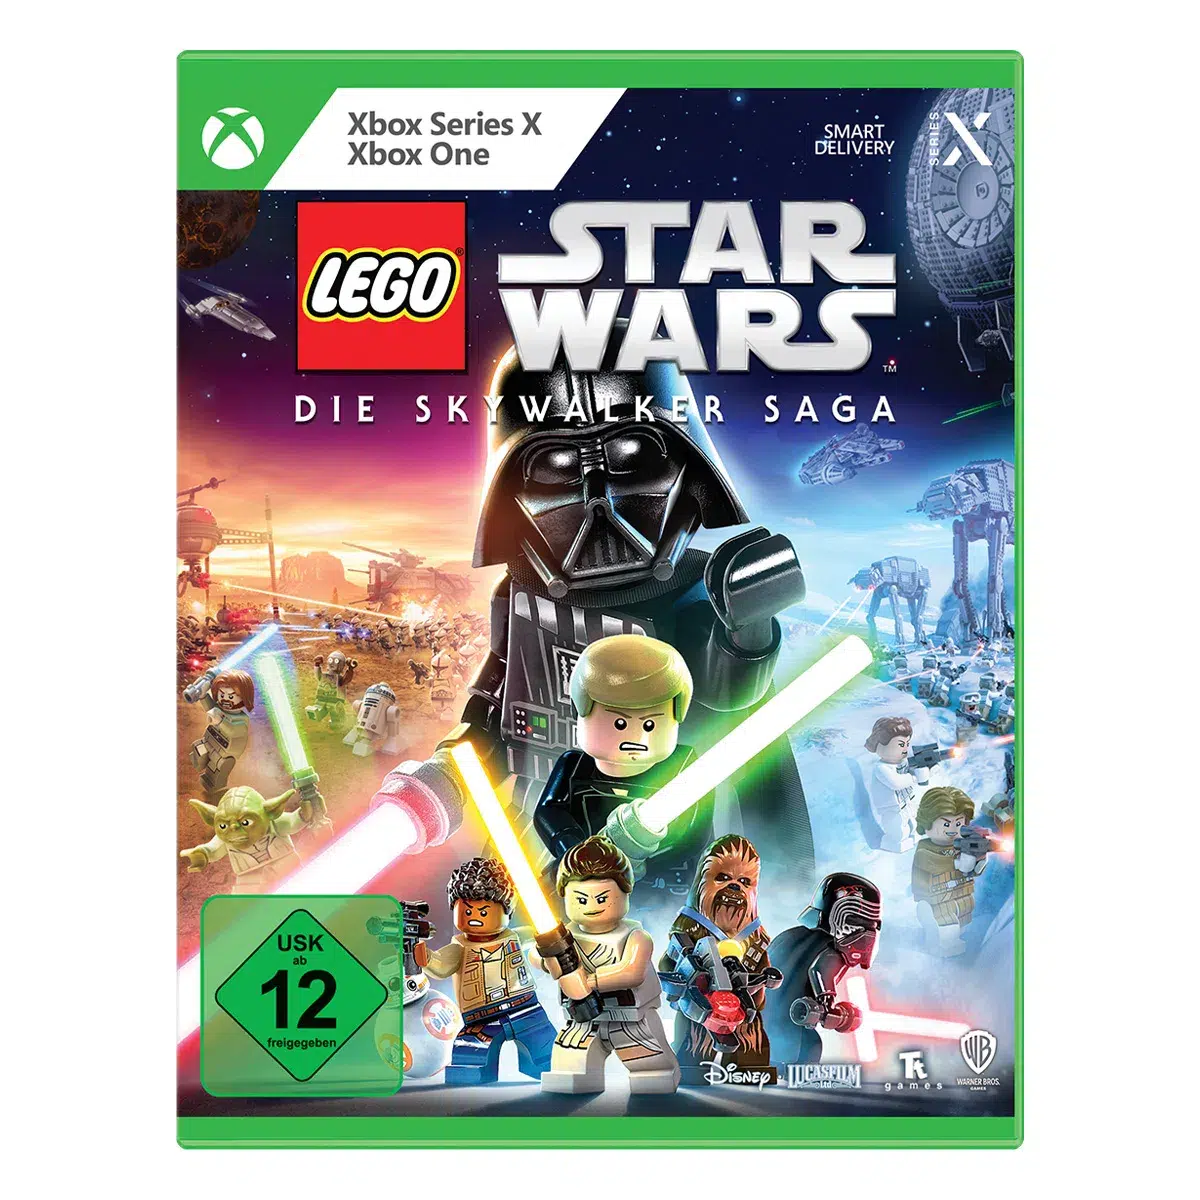 LEGO STAR WARS Die Skywalker Saga (Xbox One / Xbox Series X) Cover